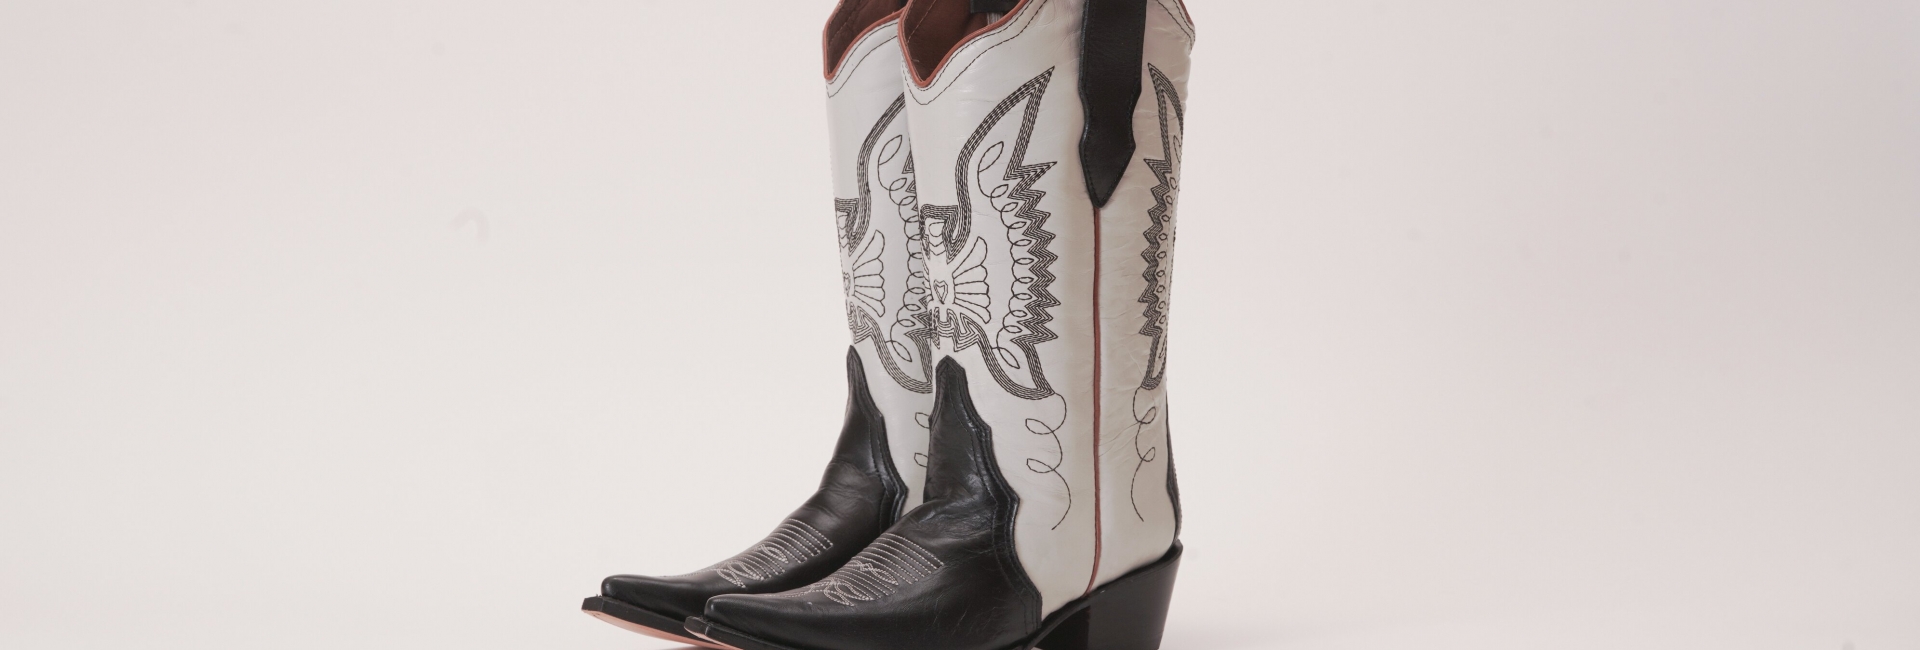 Cowboy Boots por Montserrat Messeguer.